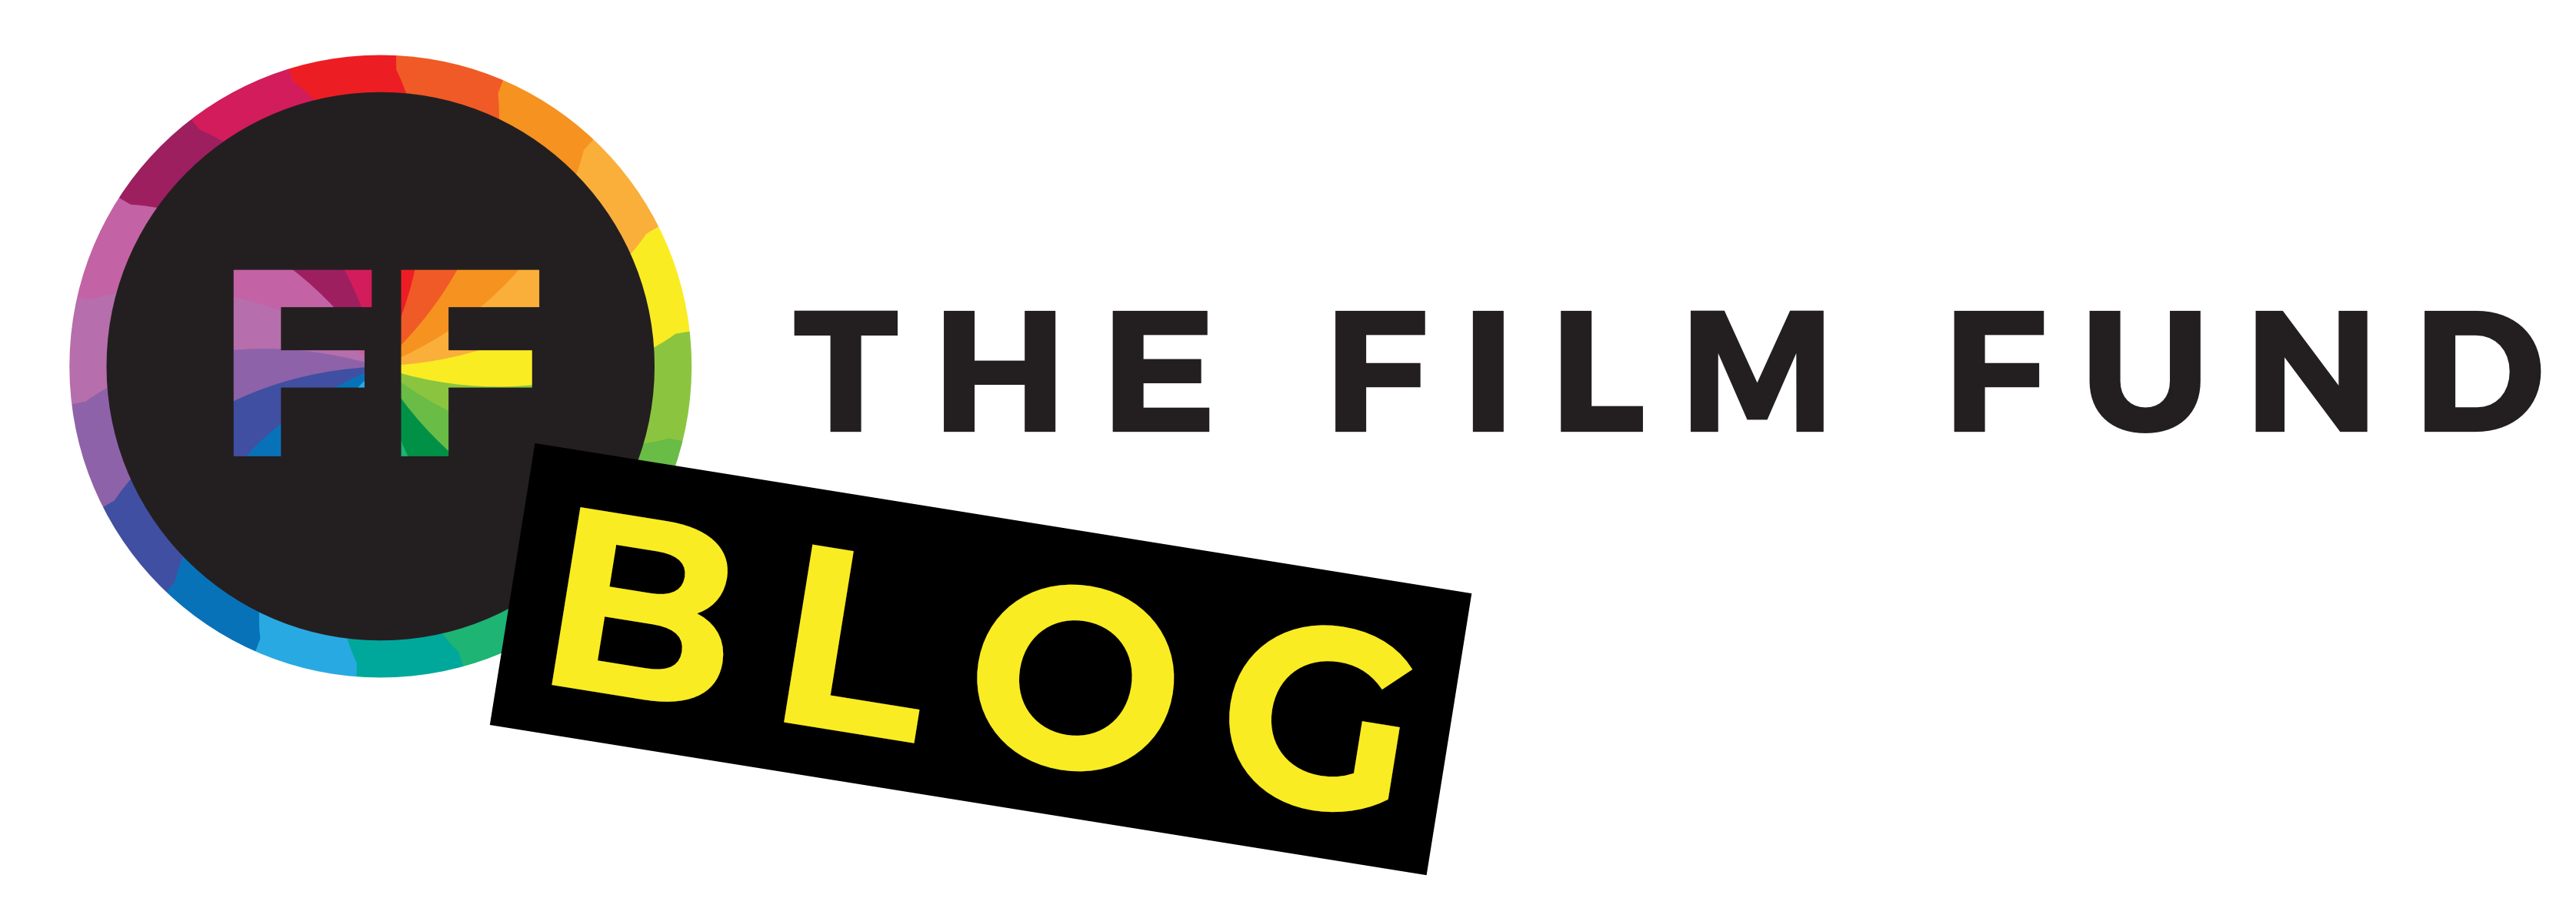 The Film Fund Blog